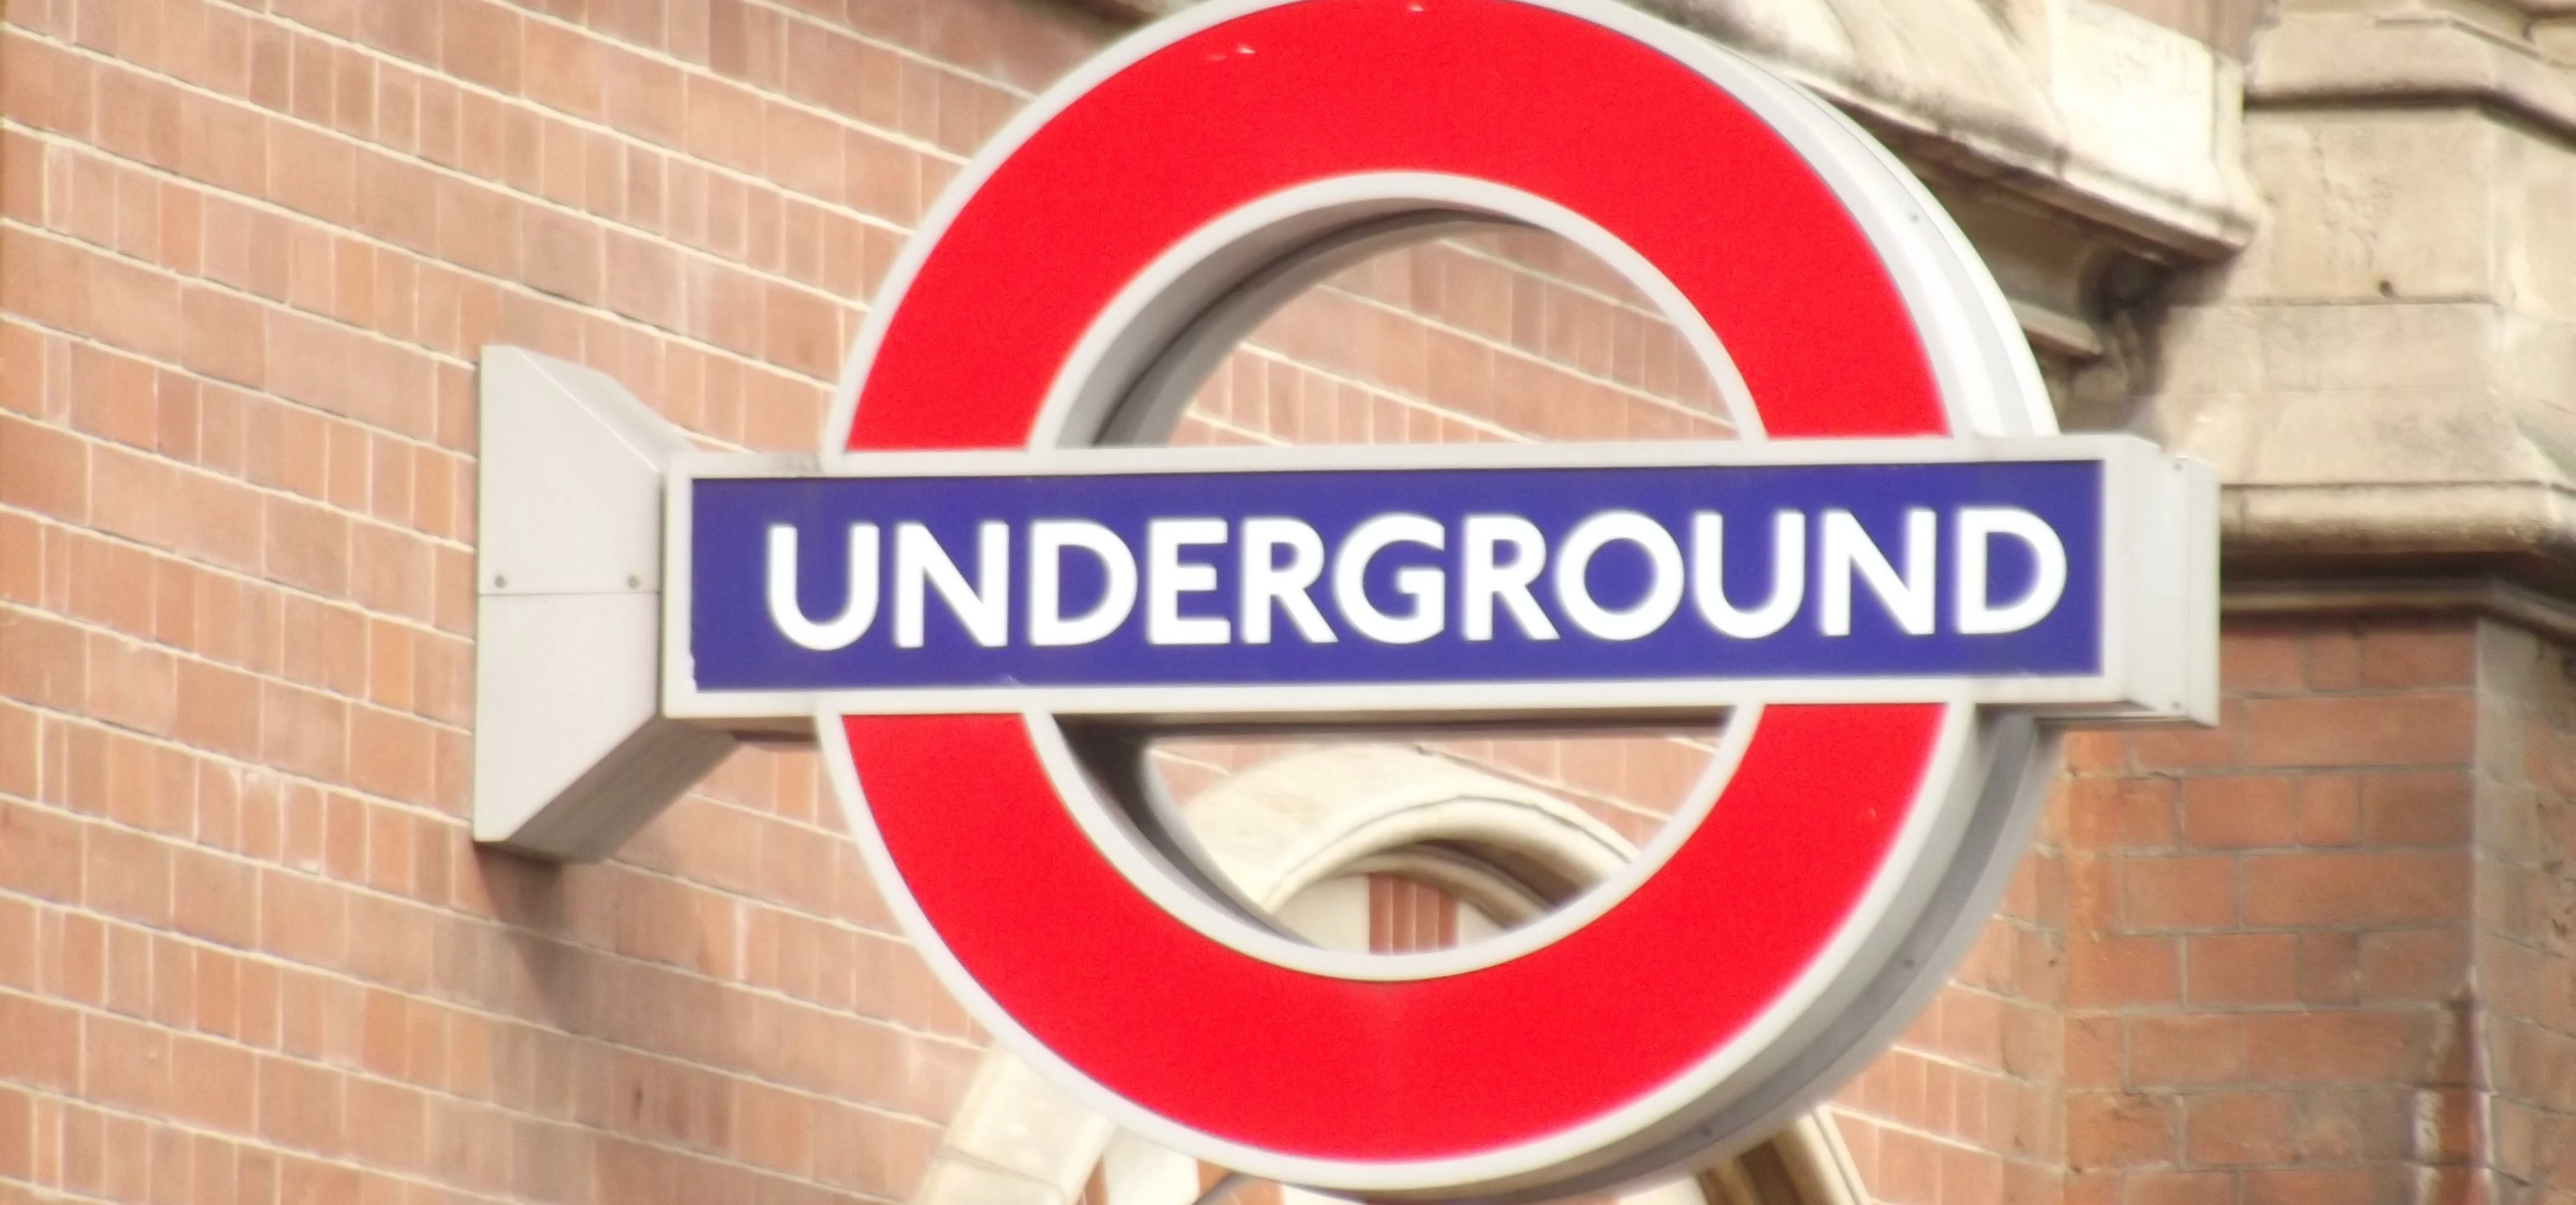 London St Pancras International Station - King's Cross St Pancras Underground Station - Underground 